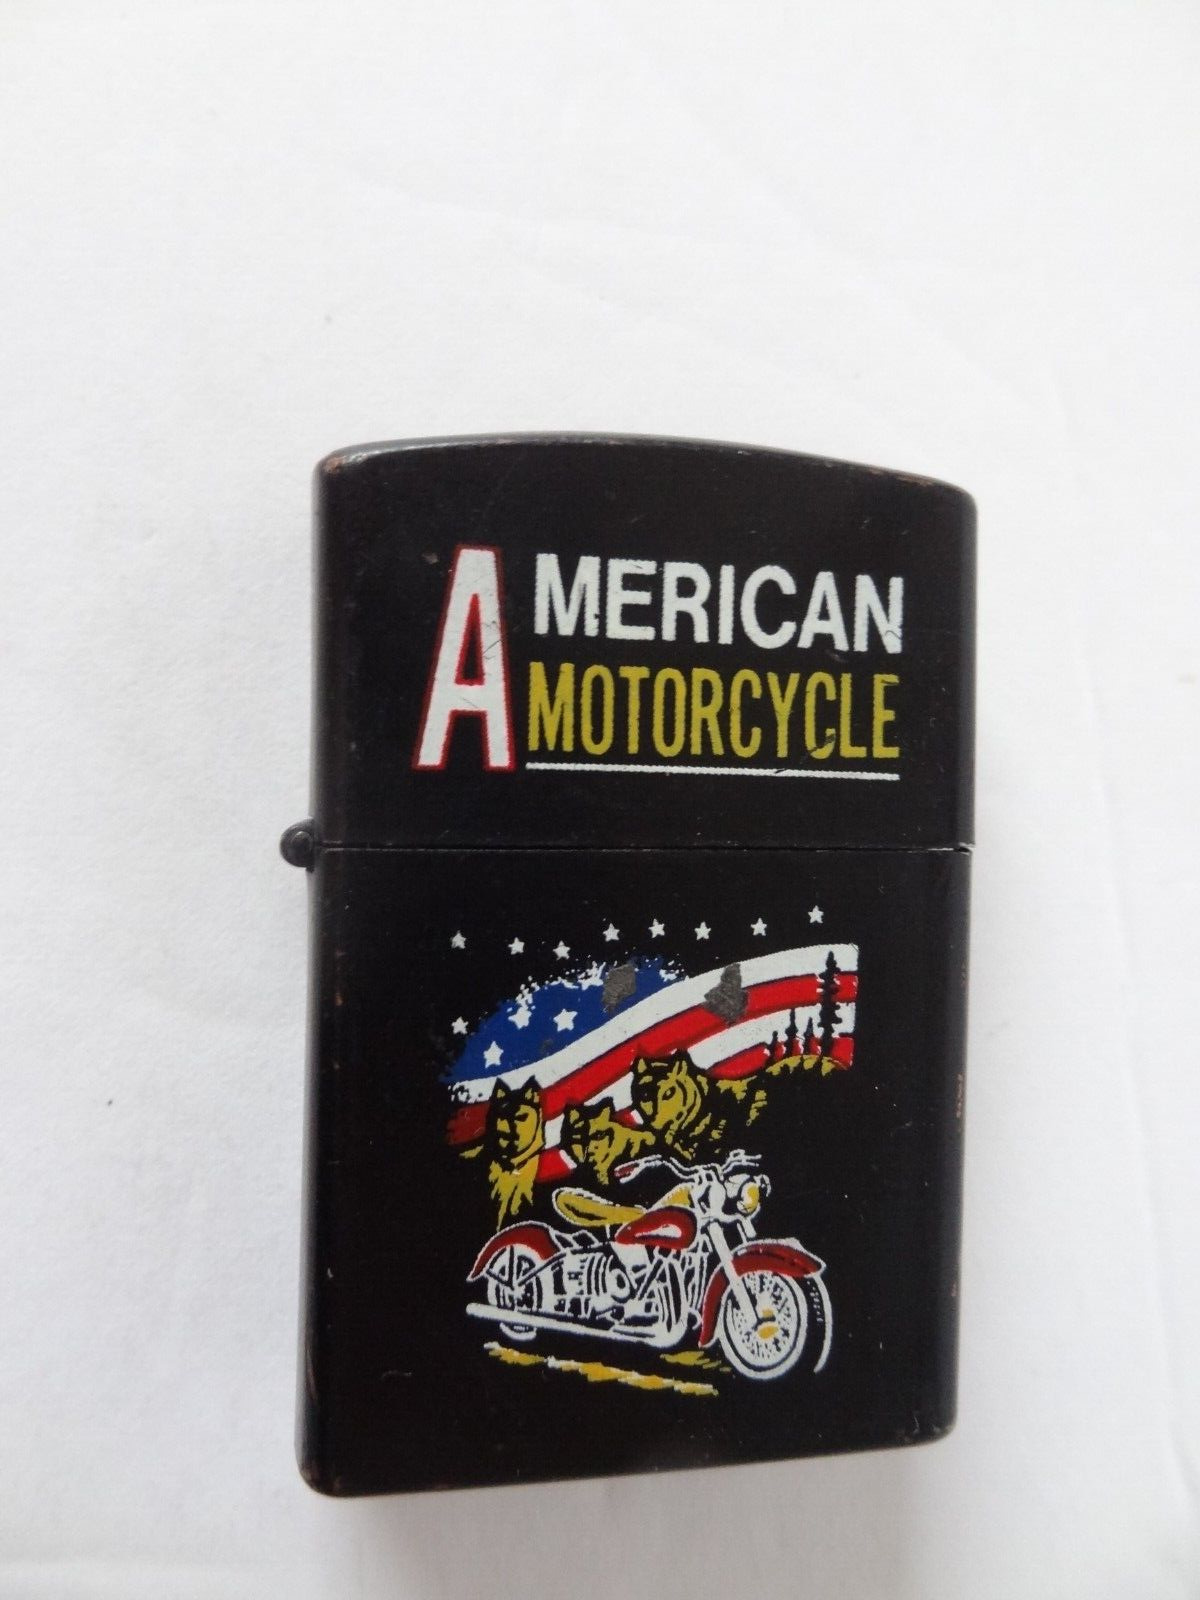 AMERICAN MOTORCYCLE Windproof Cigarette Lighter. Very Patriotic..